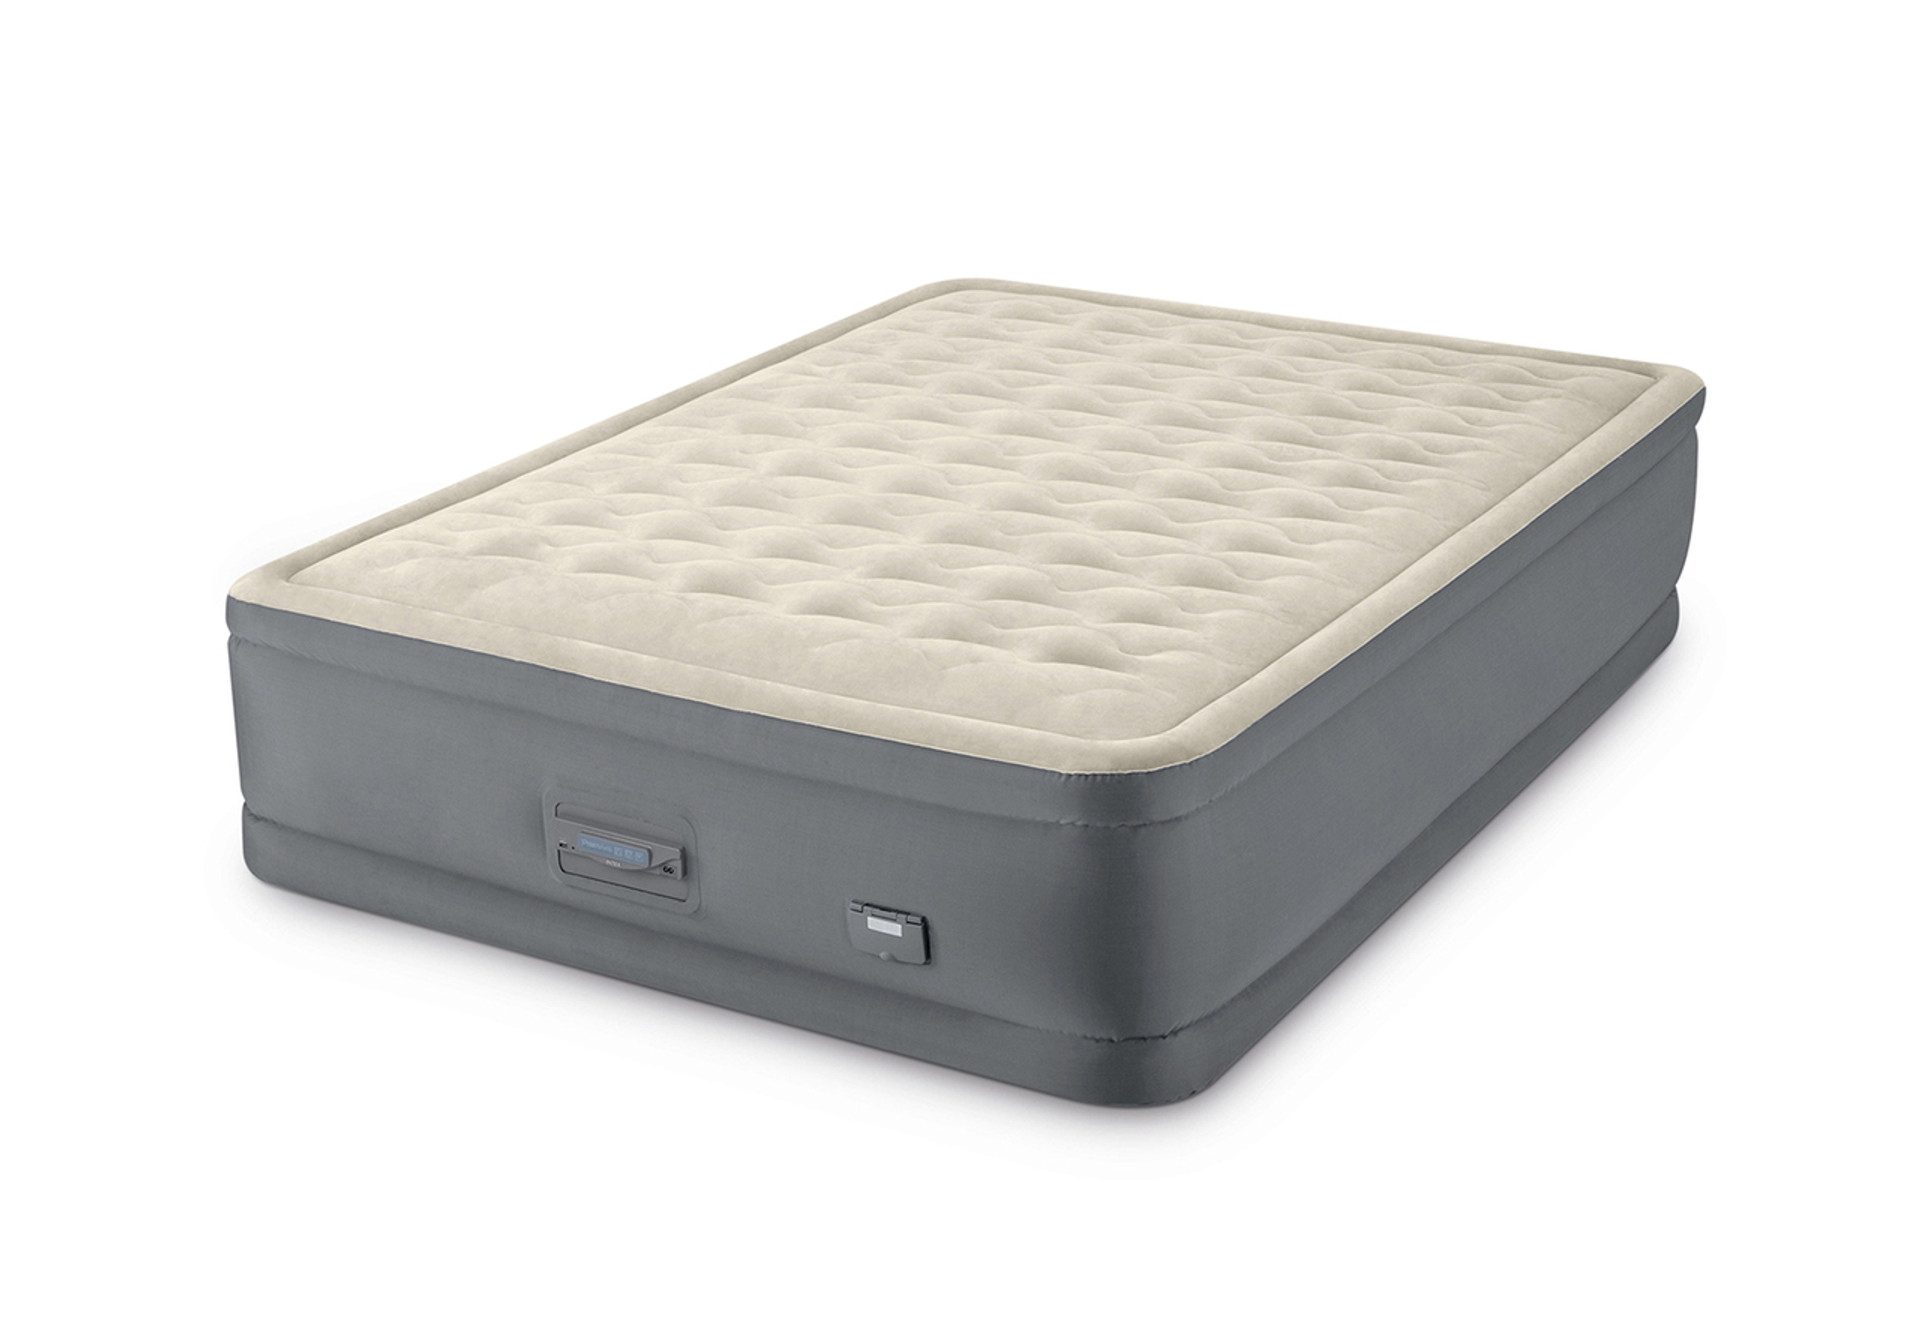 intex premaire ii air mattress: